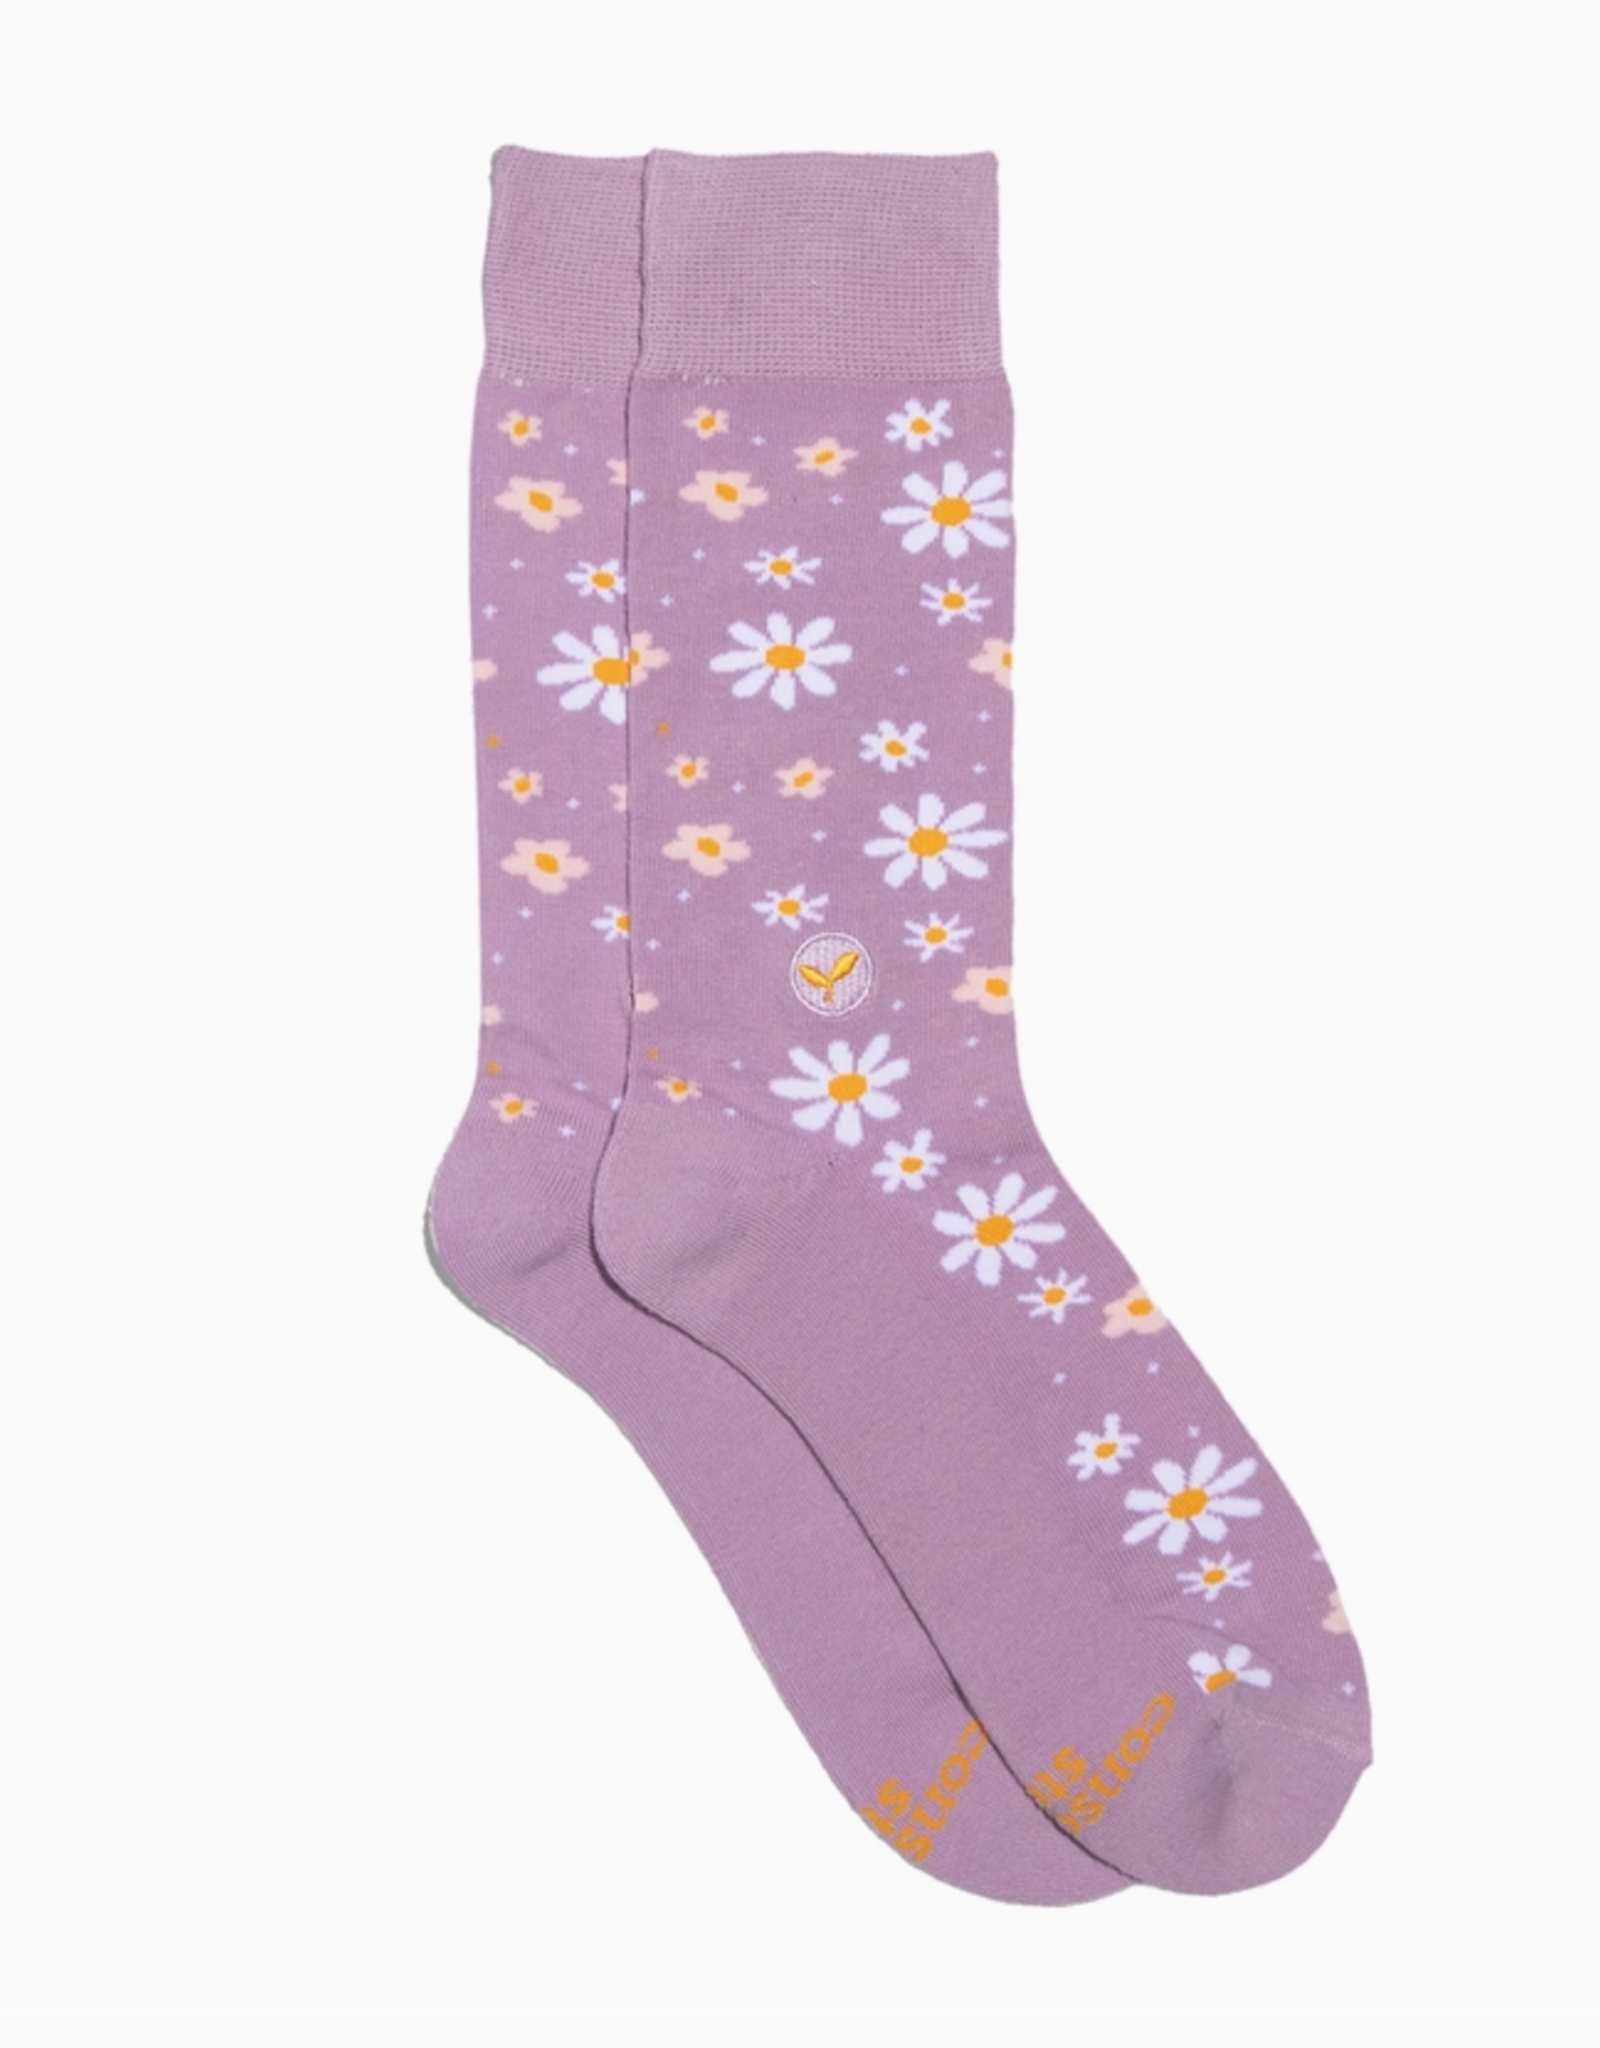 Conscious Step Socks that Plant Trees (Lavender Daisies)